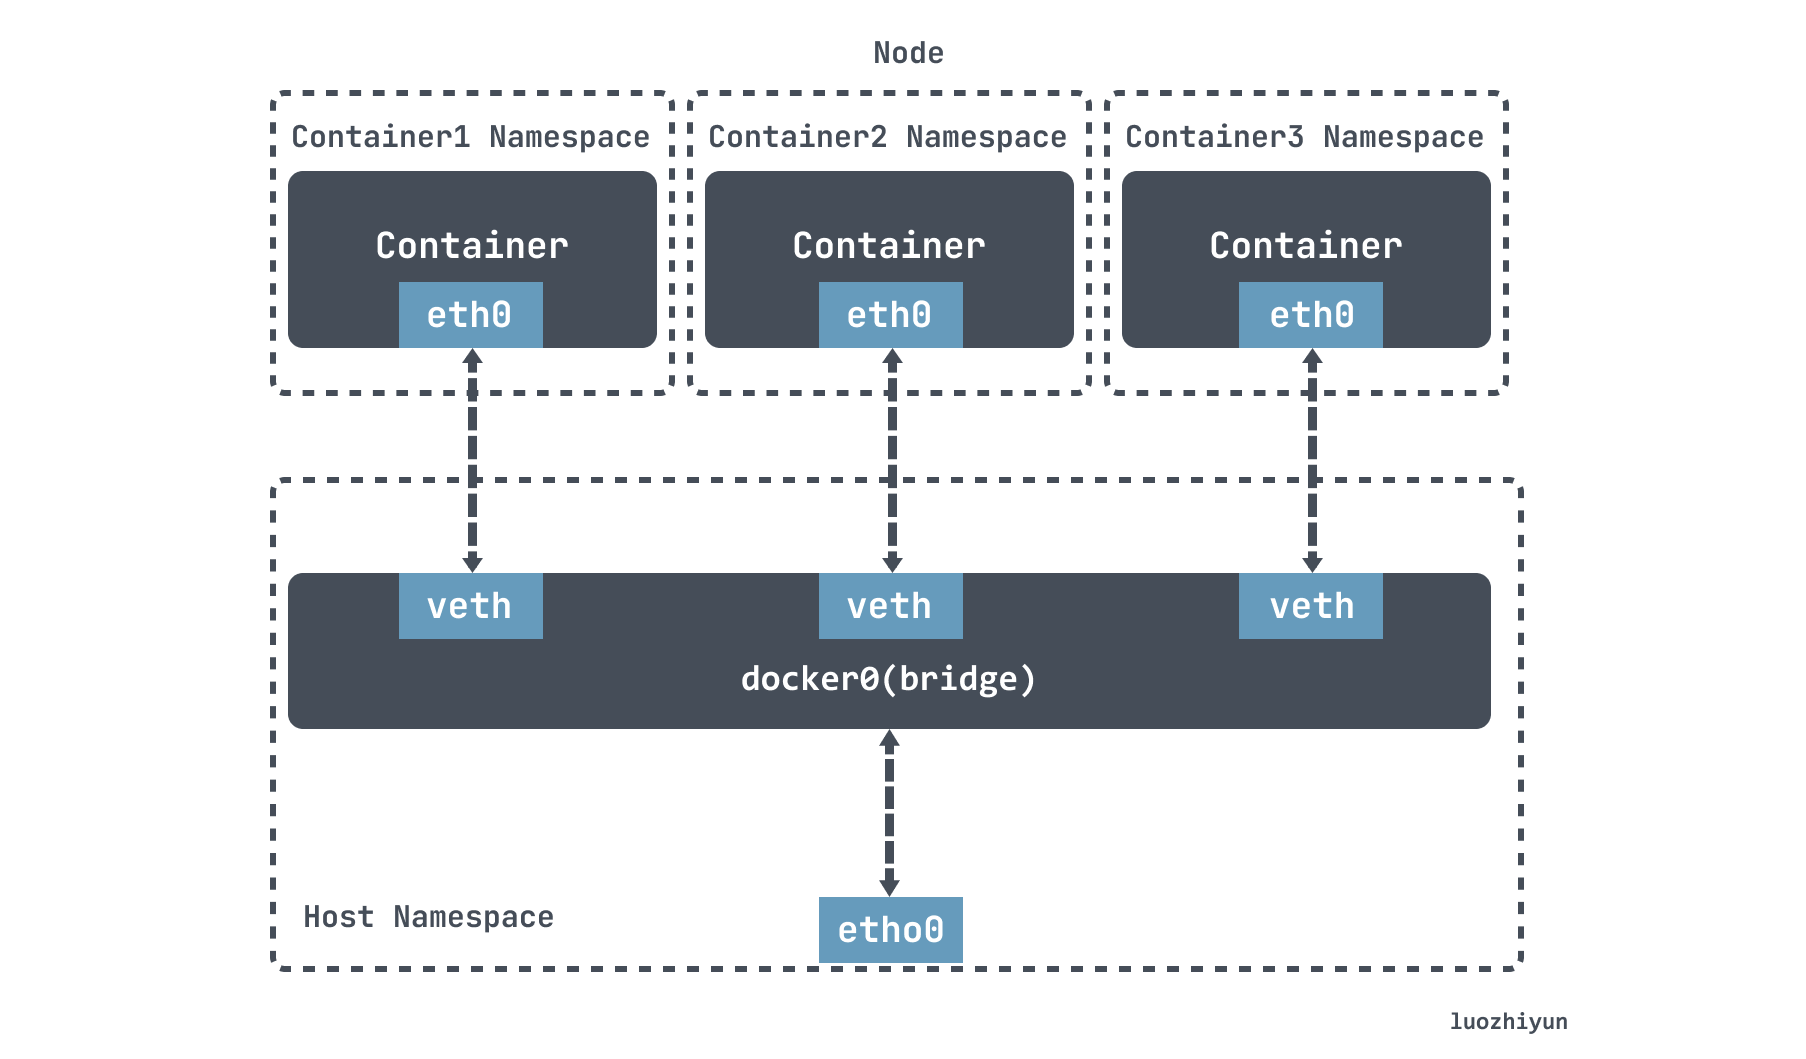 By default, Docker uses the bridge network mode